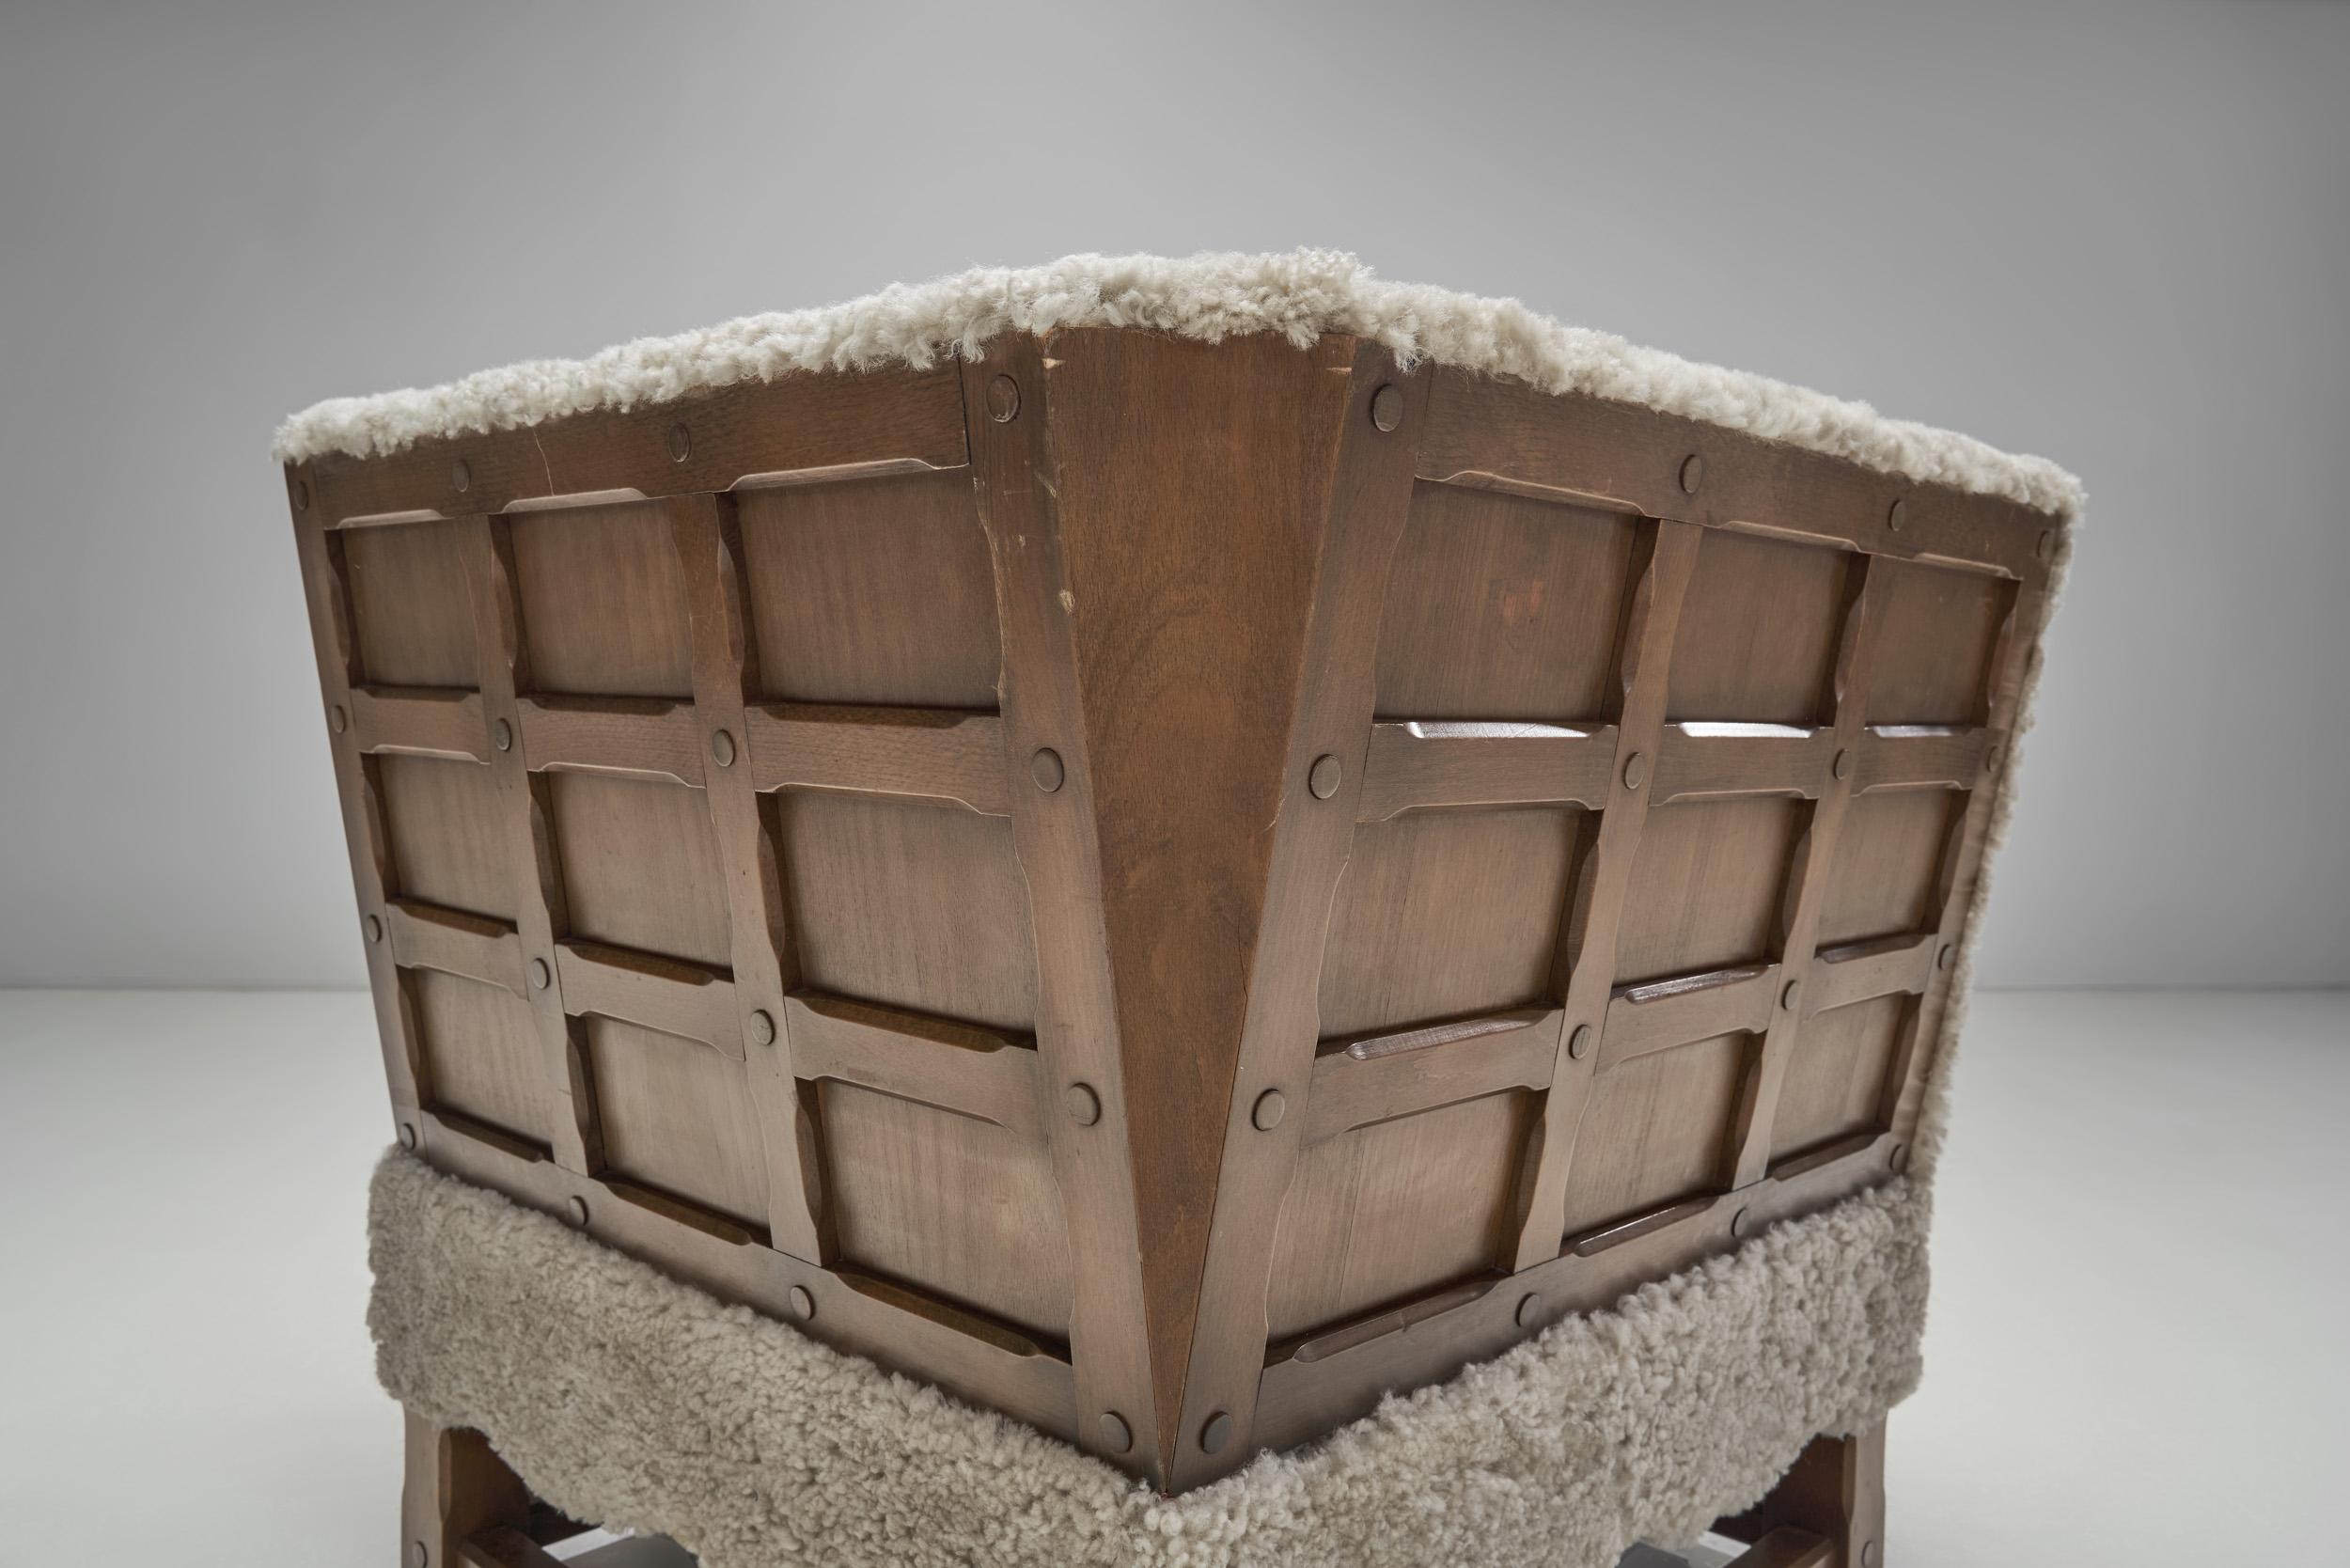 European Oak Panelled Box Chair in Sheepskin, Europe, 1940s For Sale 1